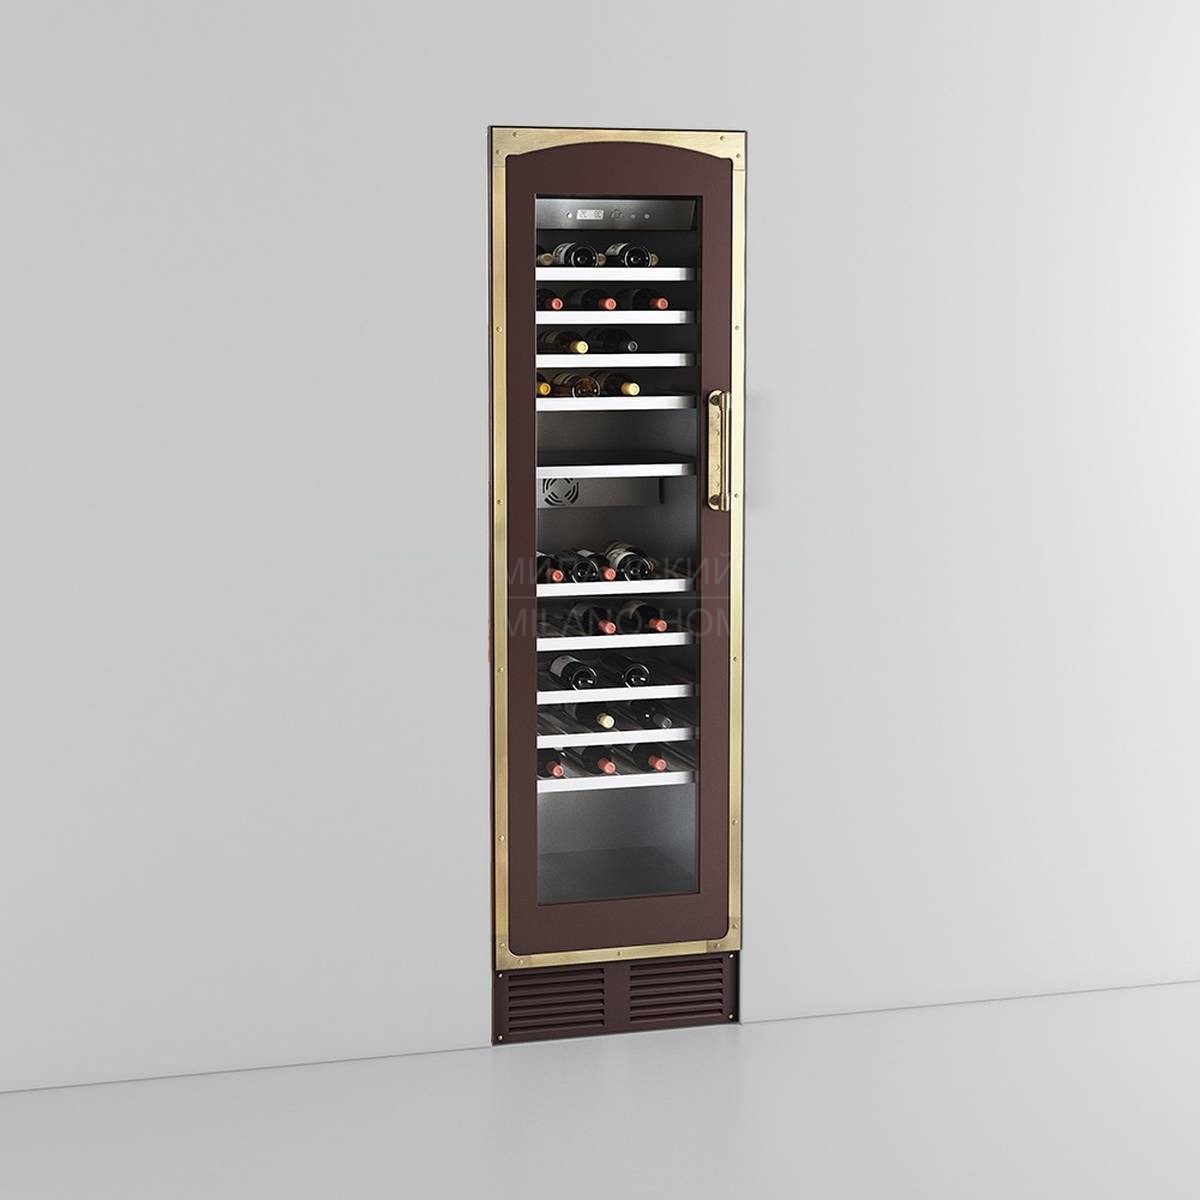 Винный шкаф Wine cabinet 45 CM professional series из Италии фабрики OFFICINE GULLO